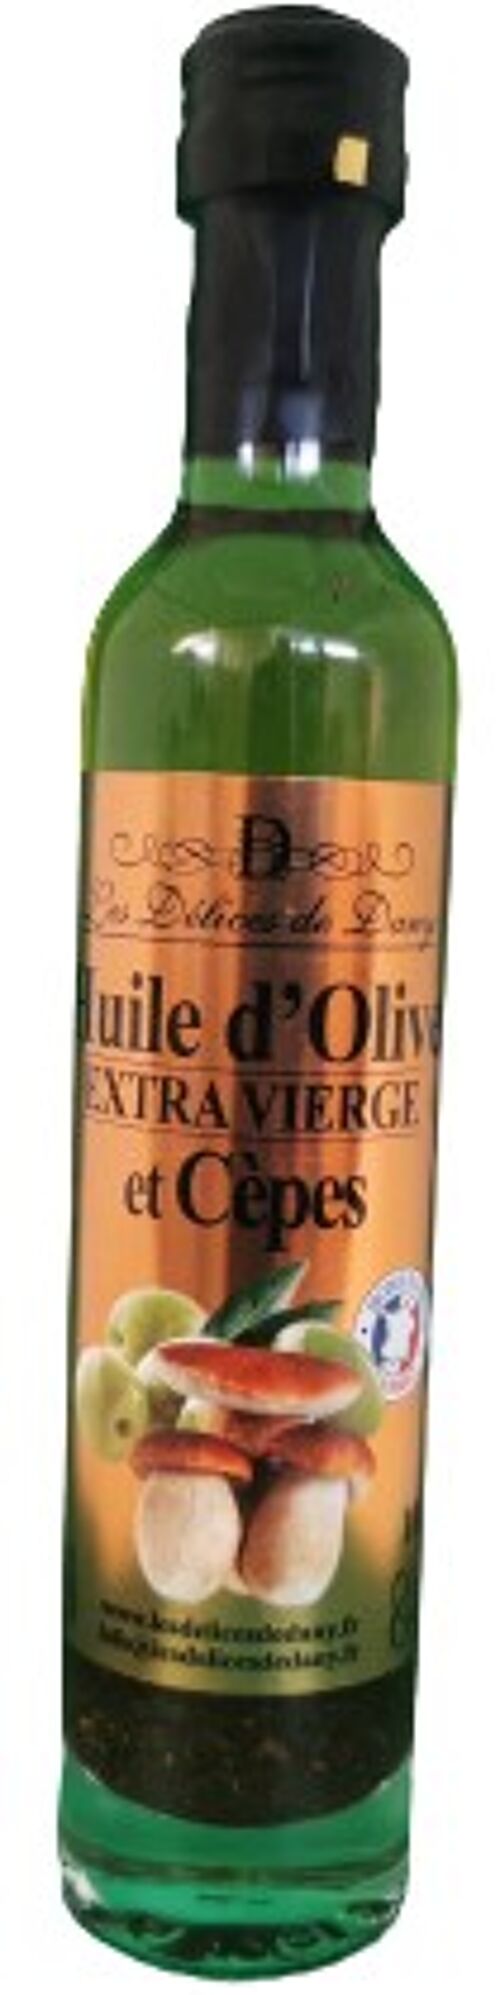 Huile d'olive vierge extra aux cèpes